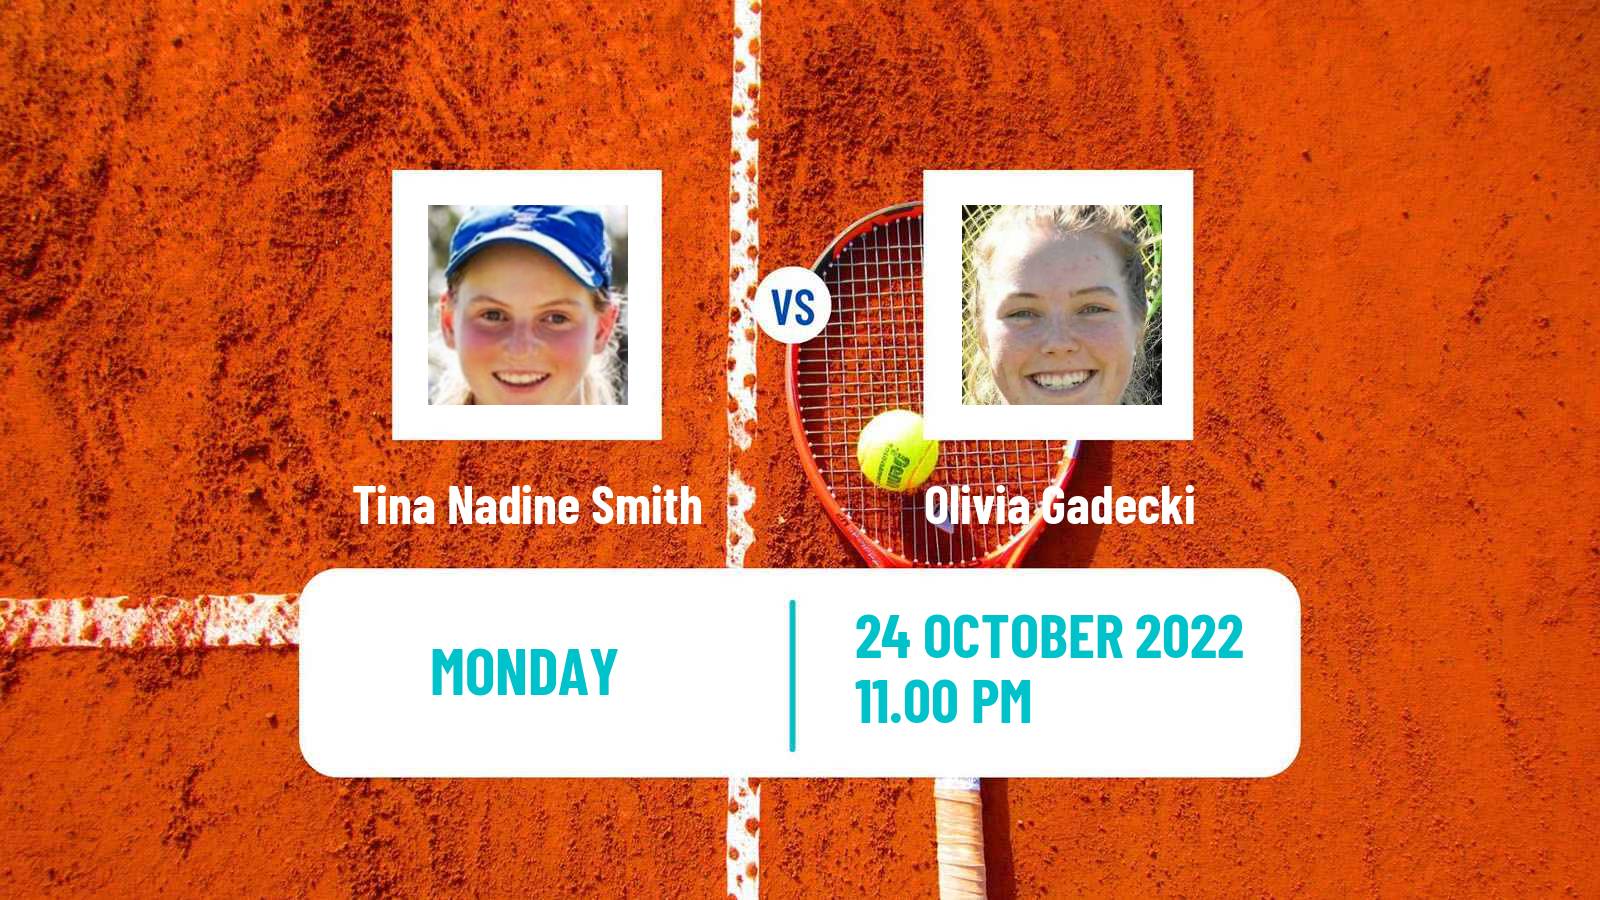 Tennis ITF Tournaments Tina Nadine Smith - Olivia Gadecki